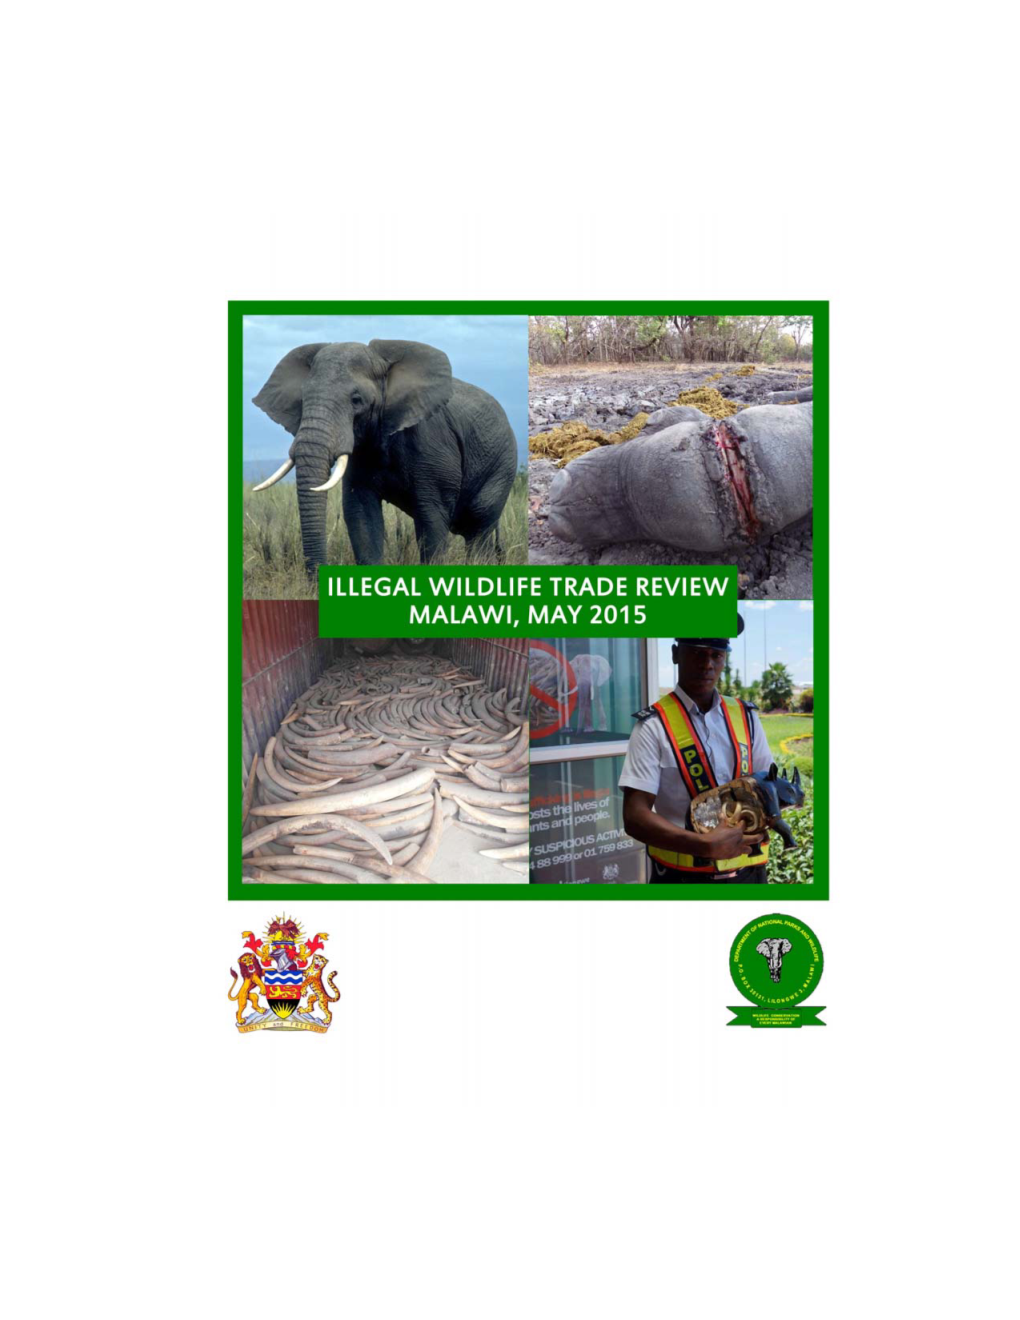 Illegal Wildlife Trade (IWT) in Malawi